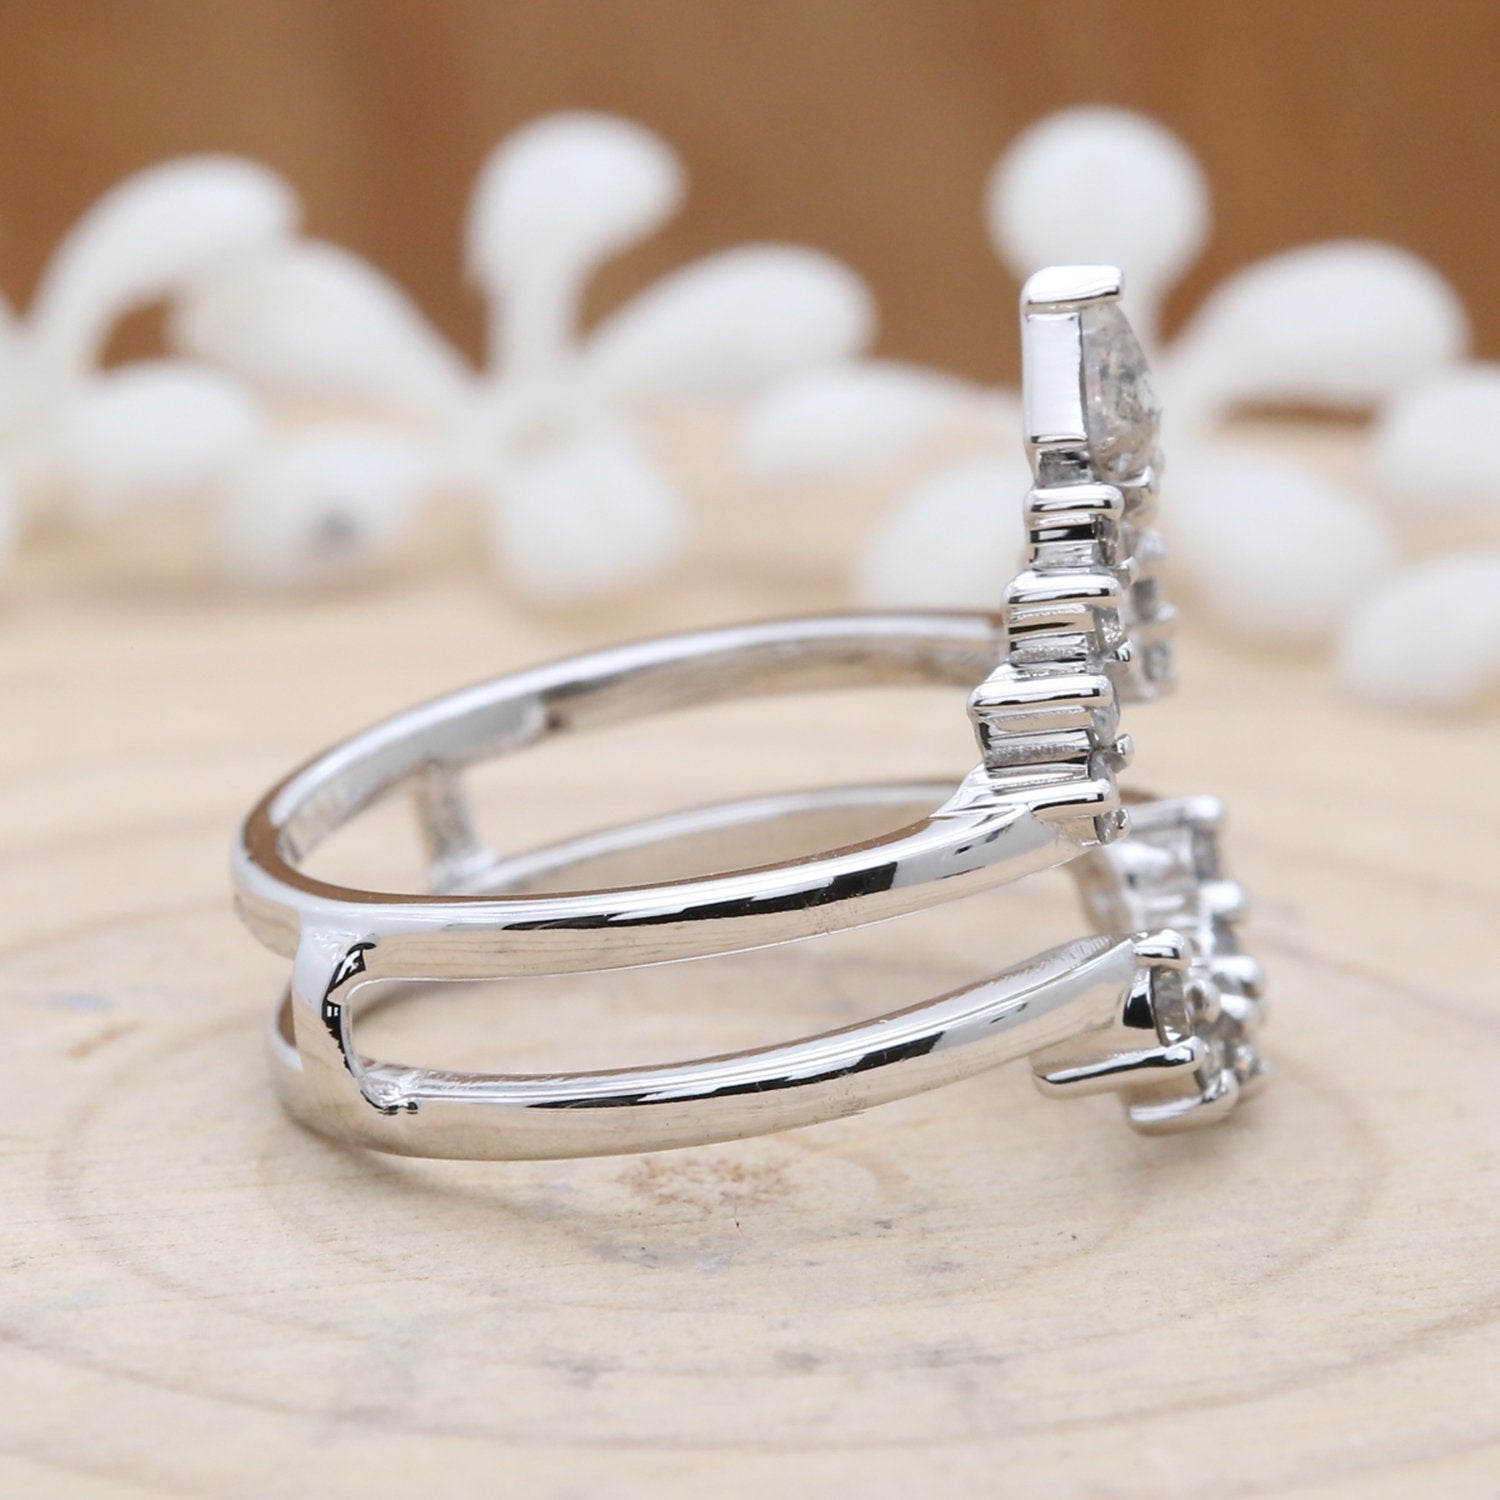 Salt And Pepper Kite Diamond 14K Solid Gold Ring Engagement Wedding Gift Ring KD698